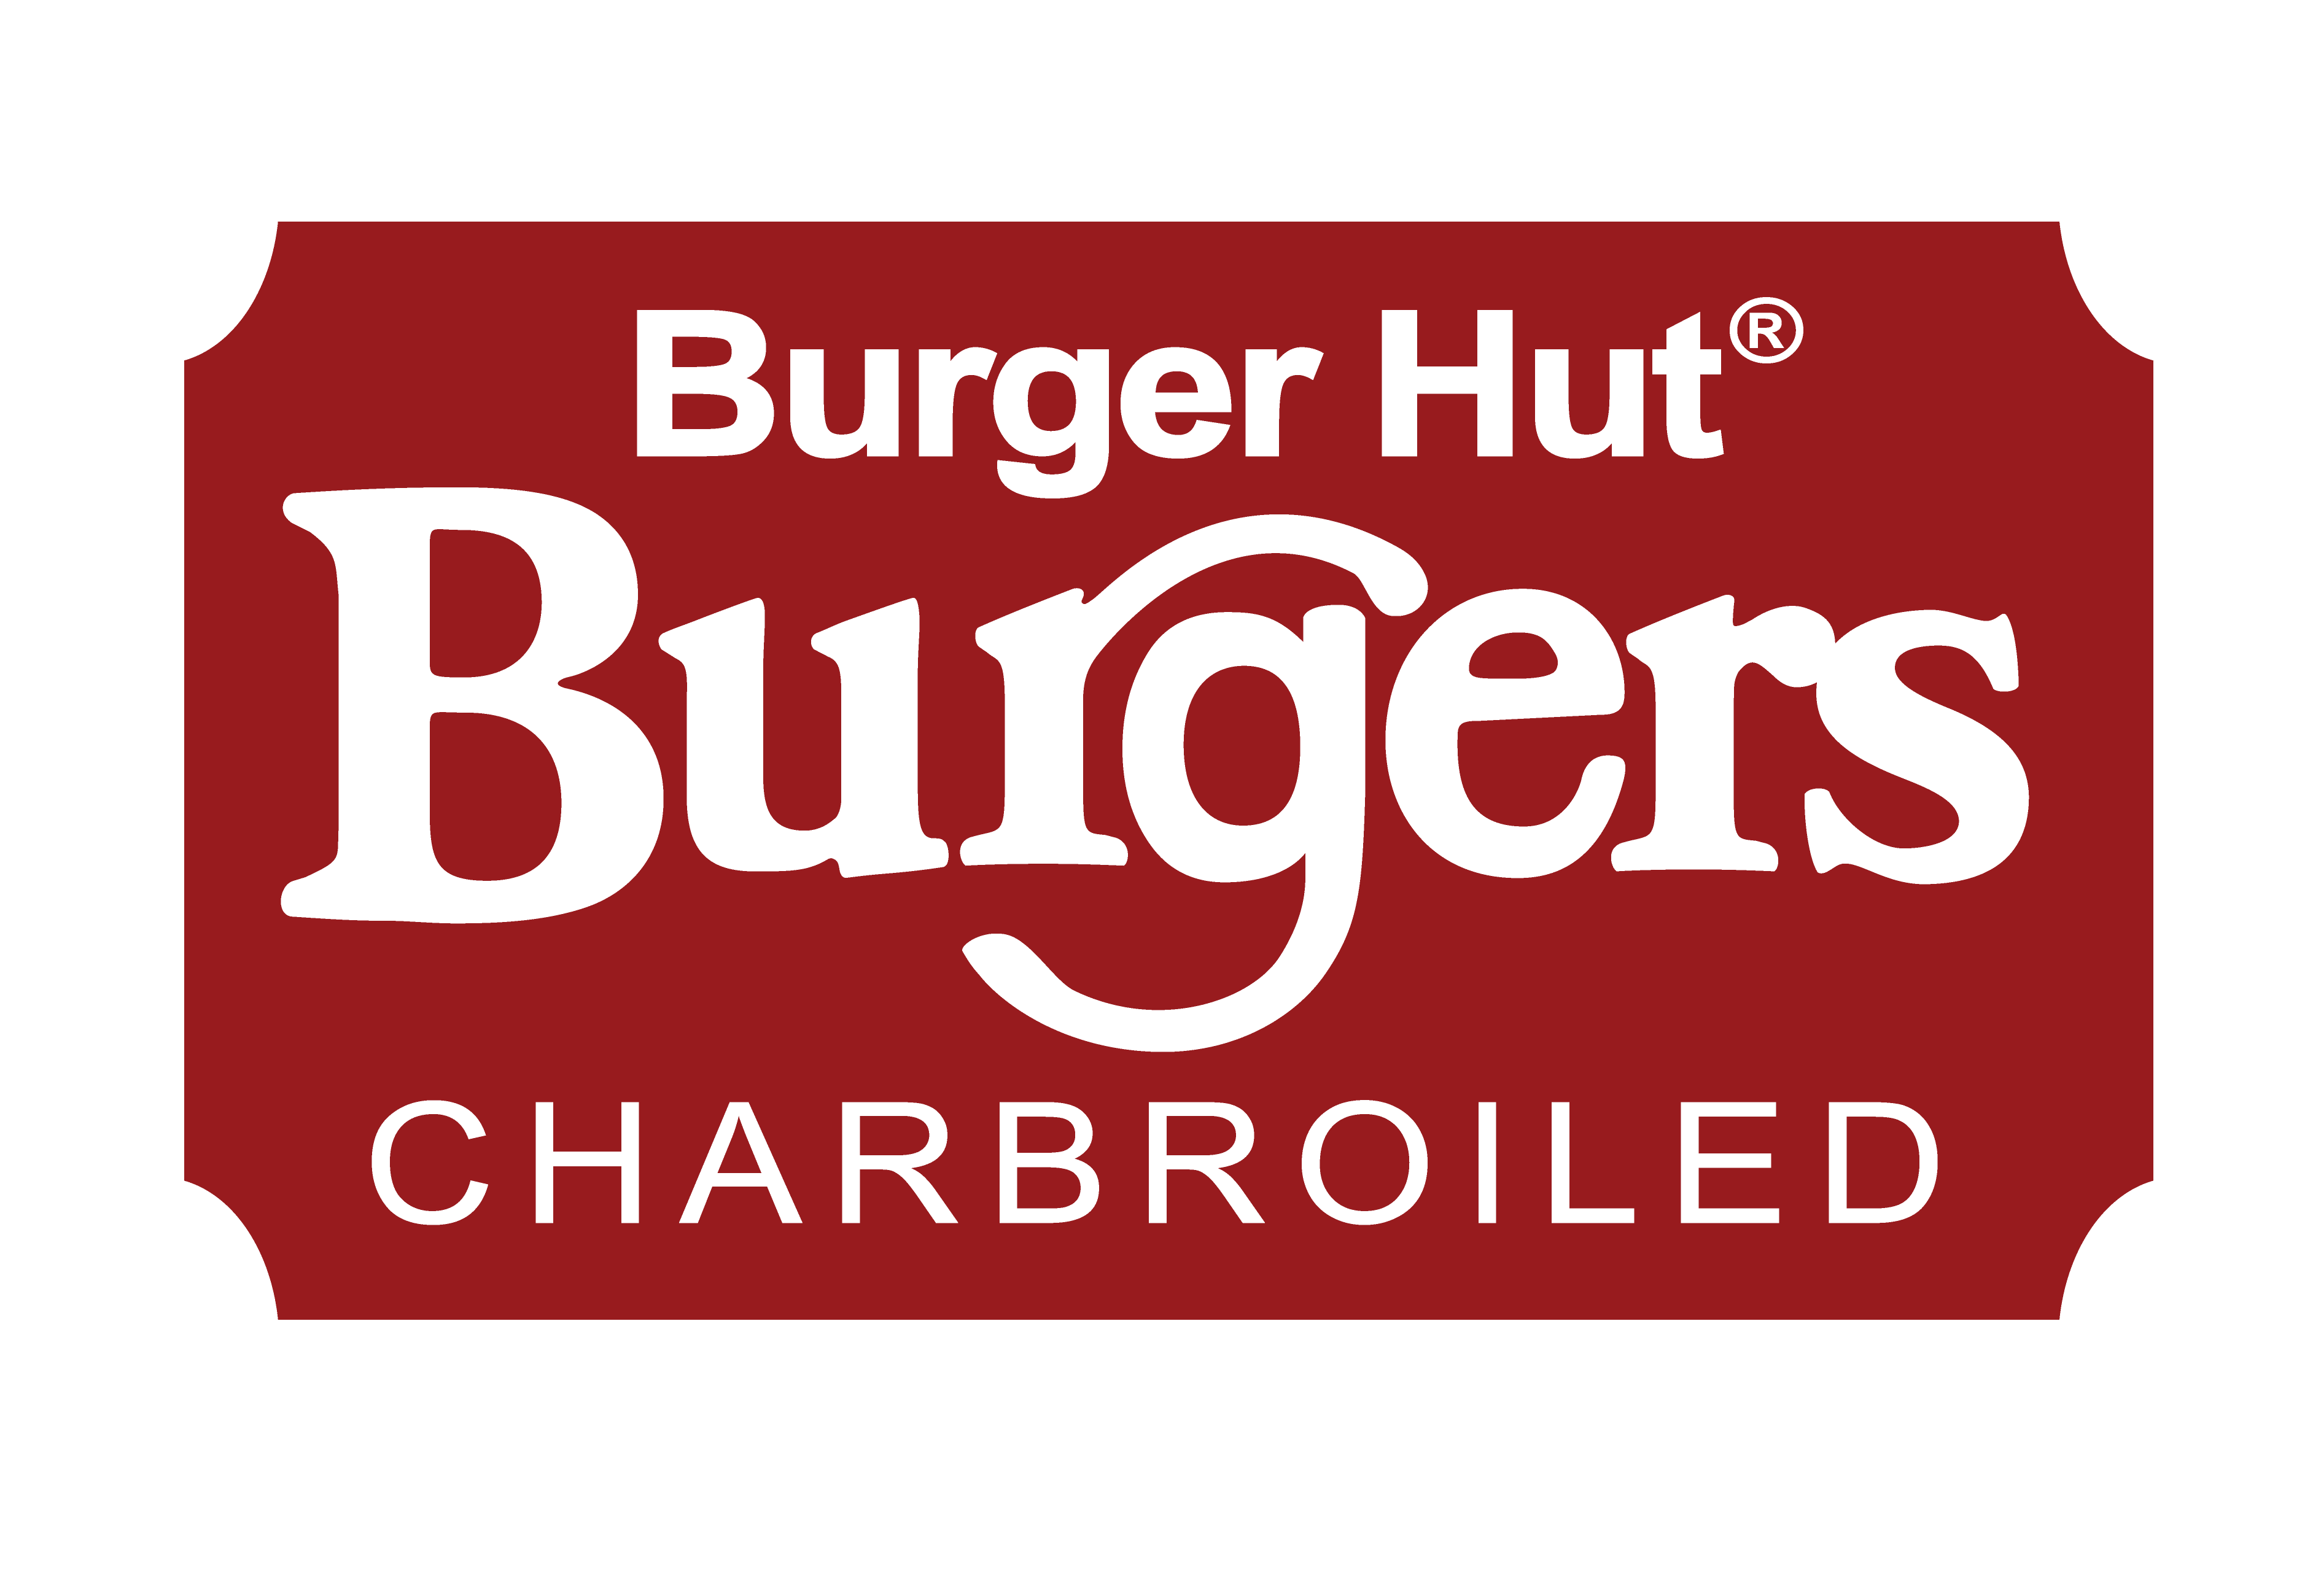 Burger Hut Burgers logo